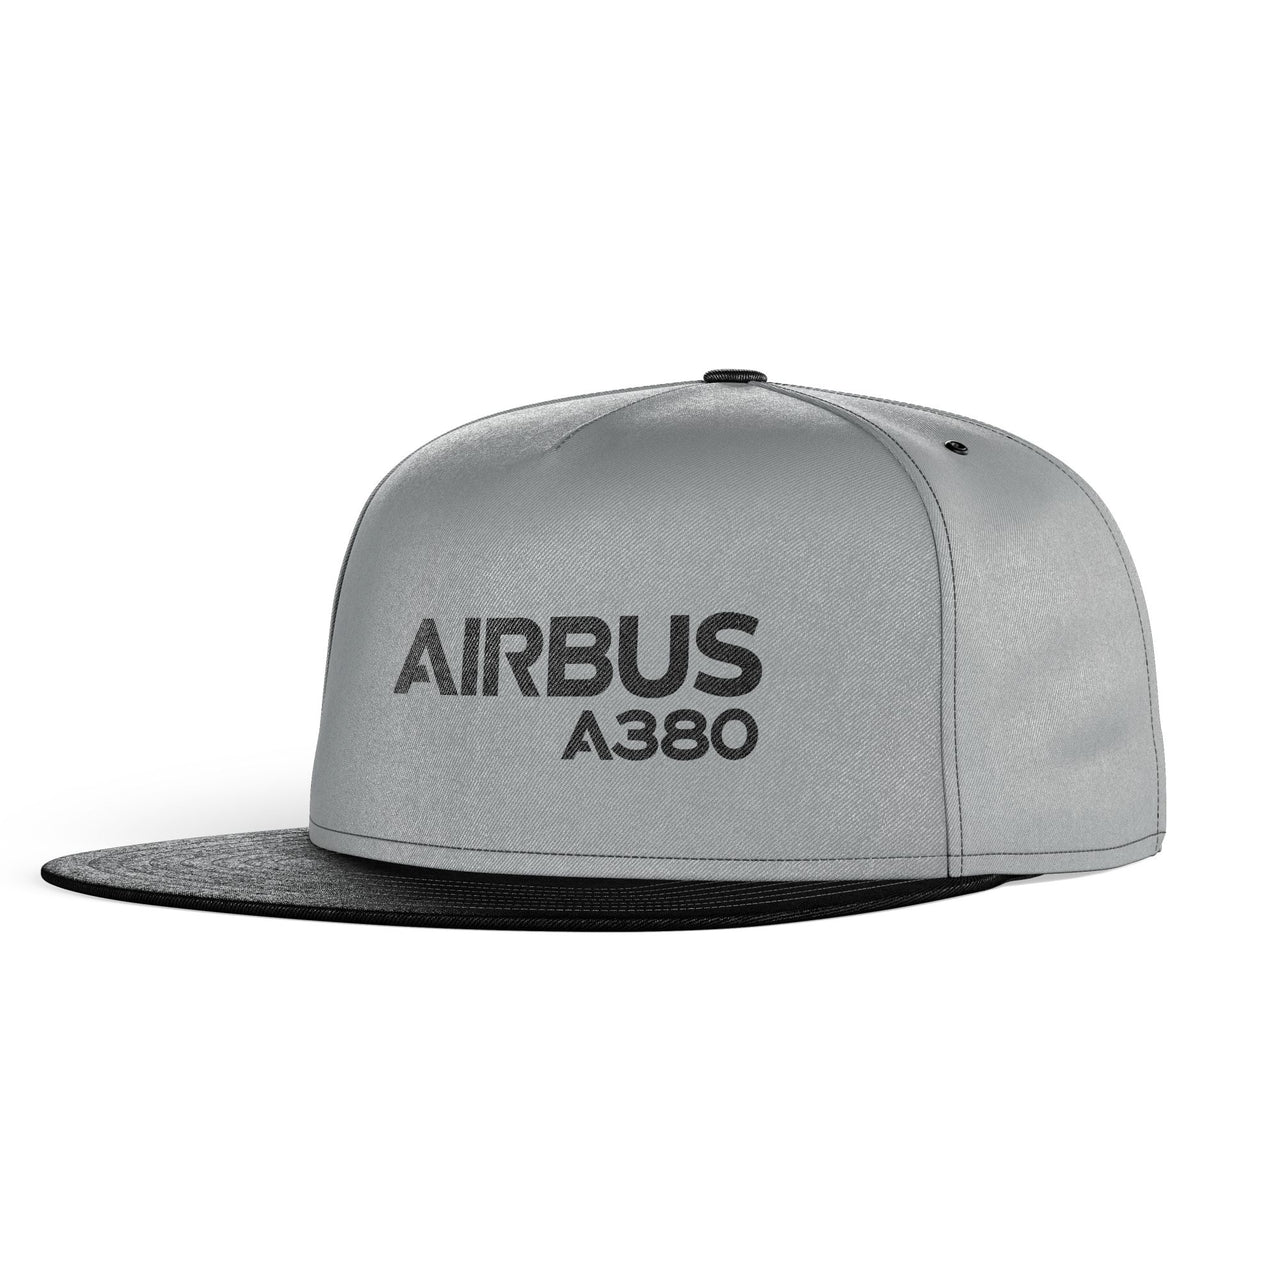 Airbus A380 & Text Designed Snapback Caps & Hats